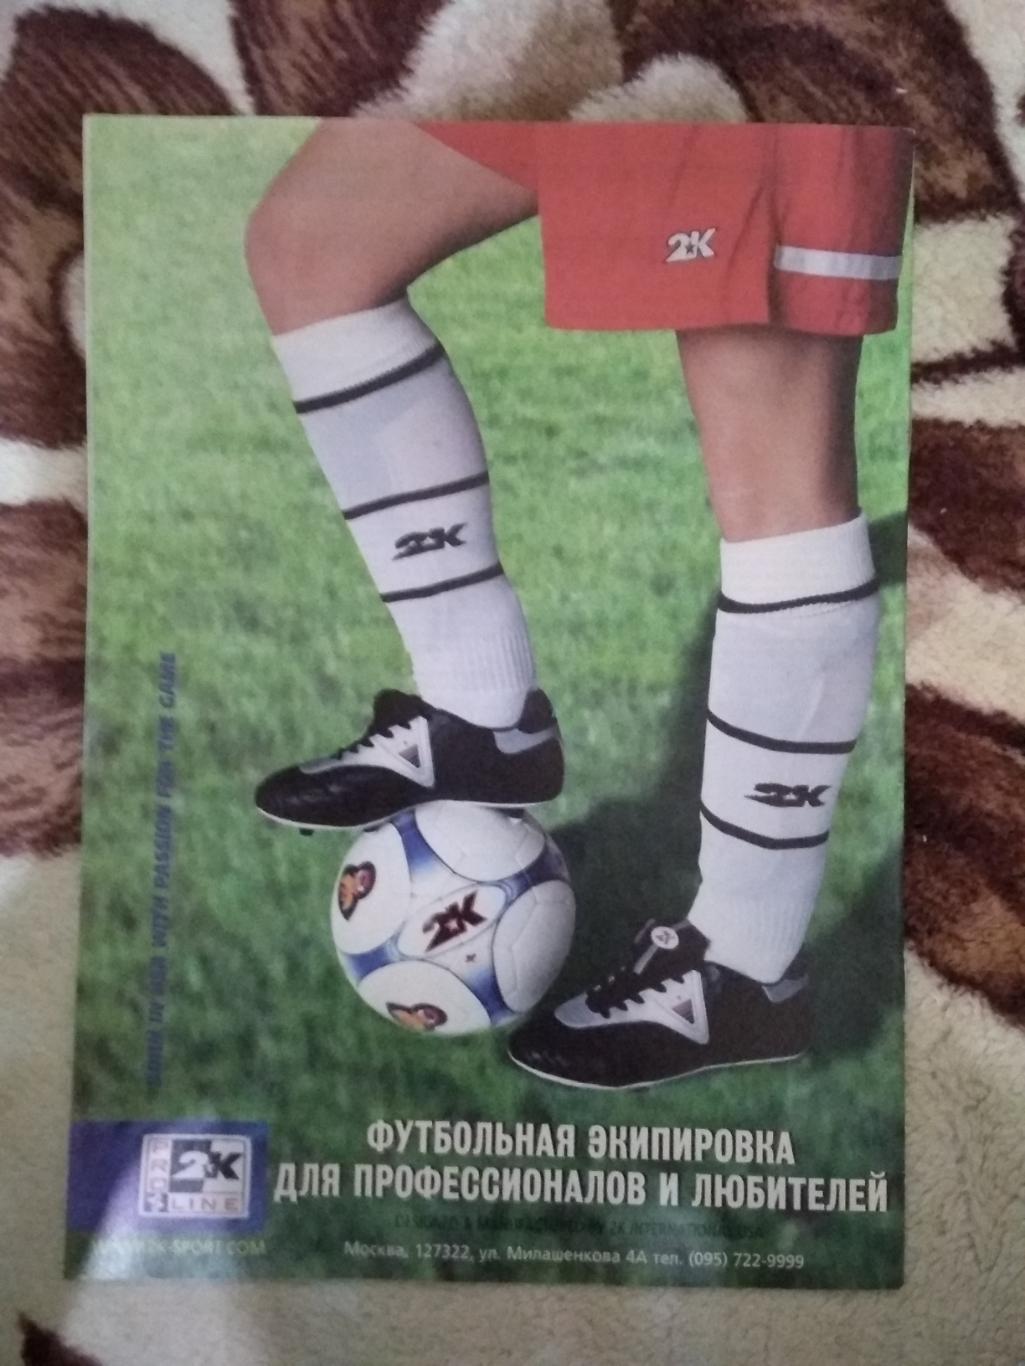 Журнал.Мой футбол №21 2002 г. (Чемпионат мира) (постер). 2